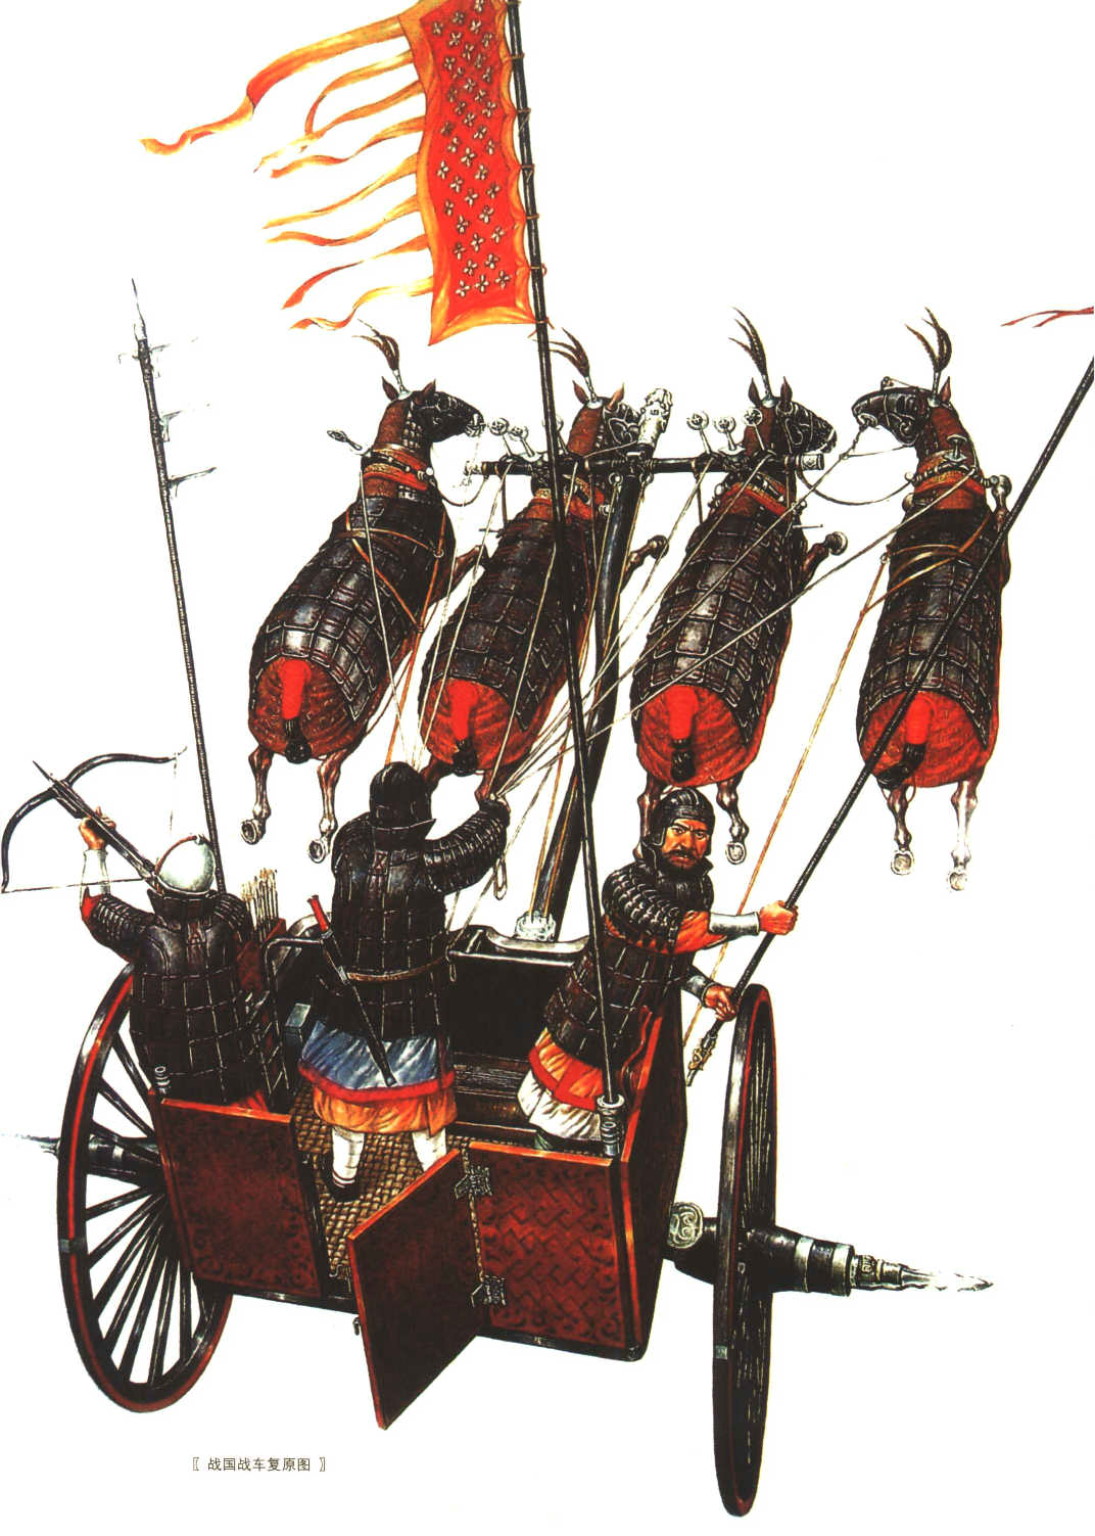 Chinese Chariots